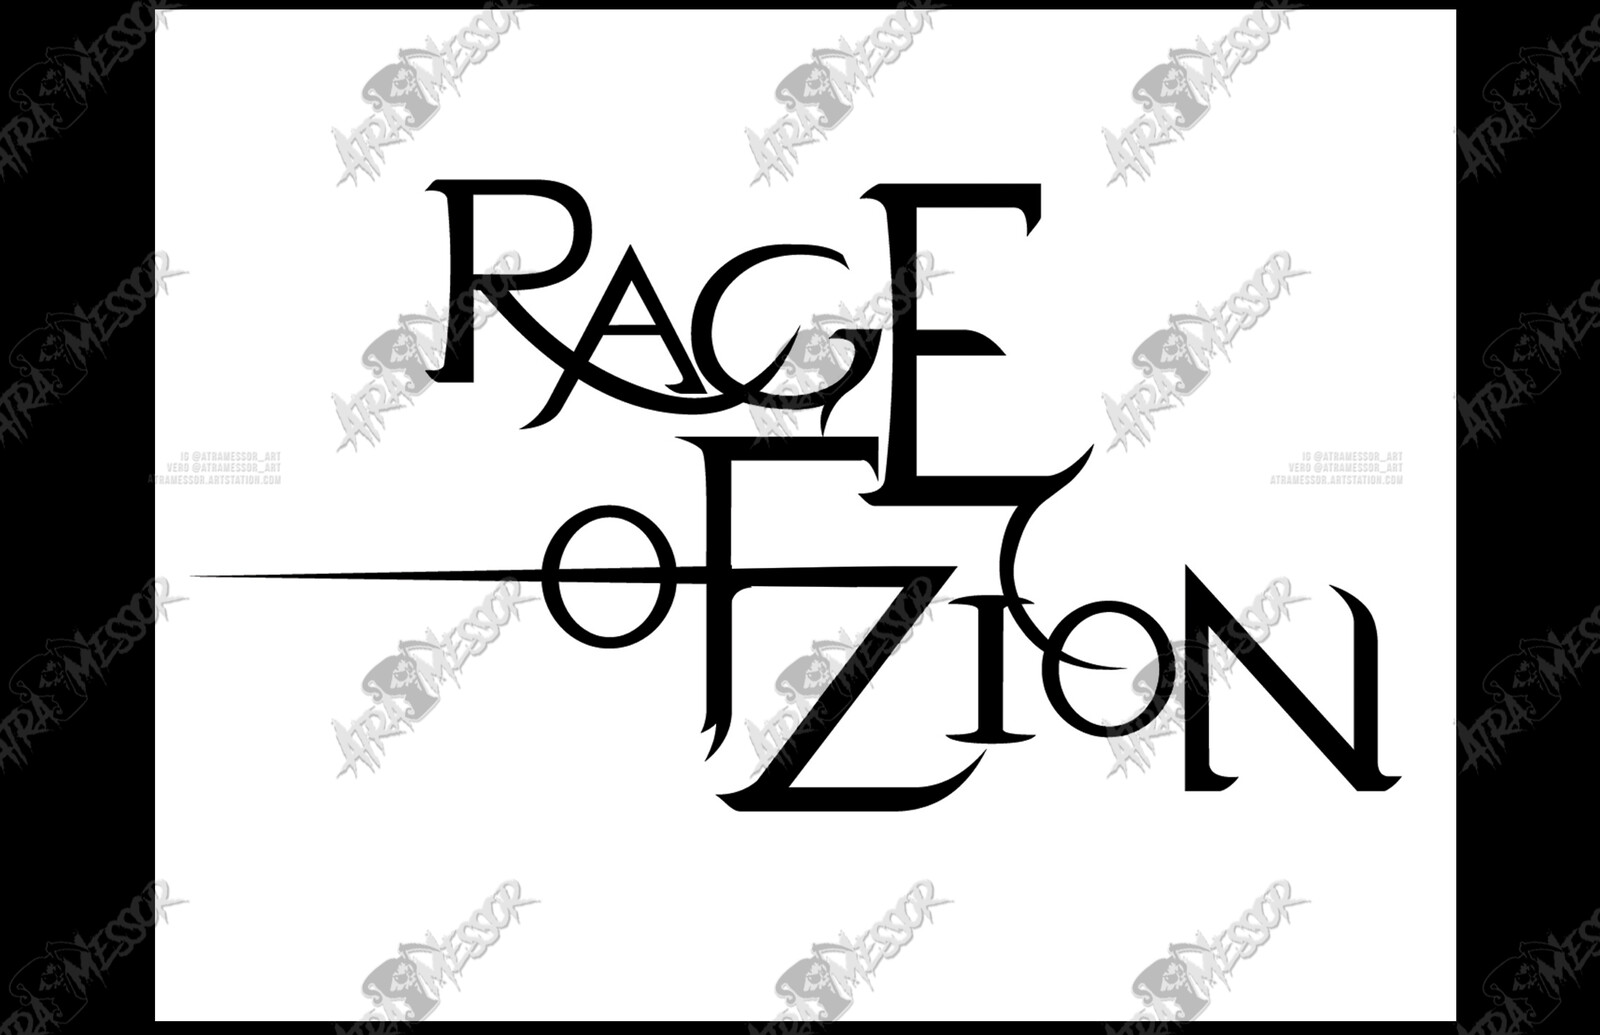 Rage of Zion logo (band)